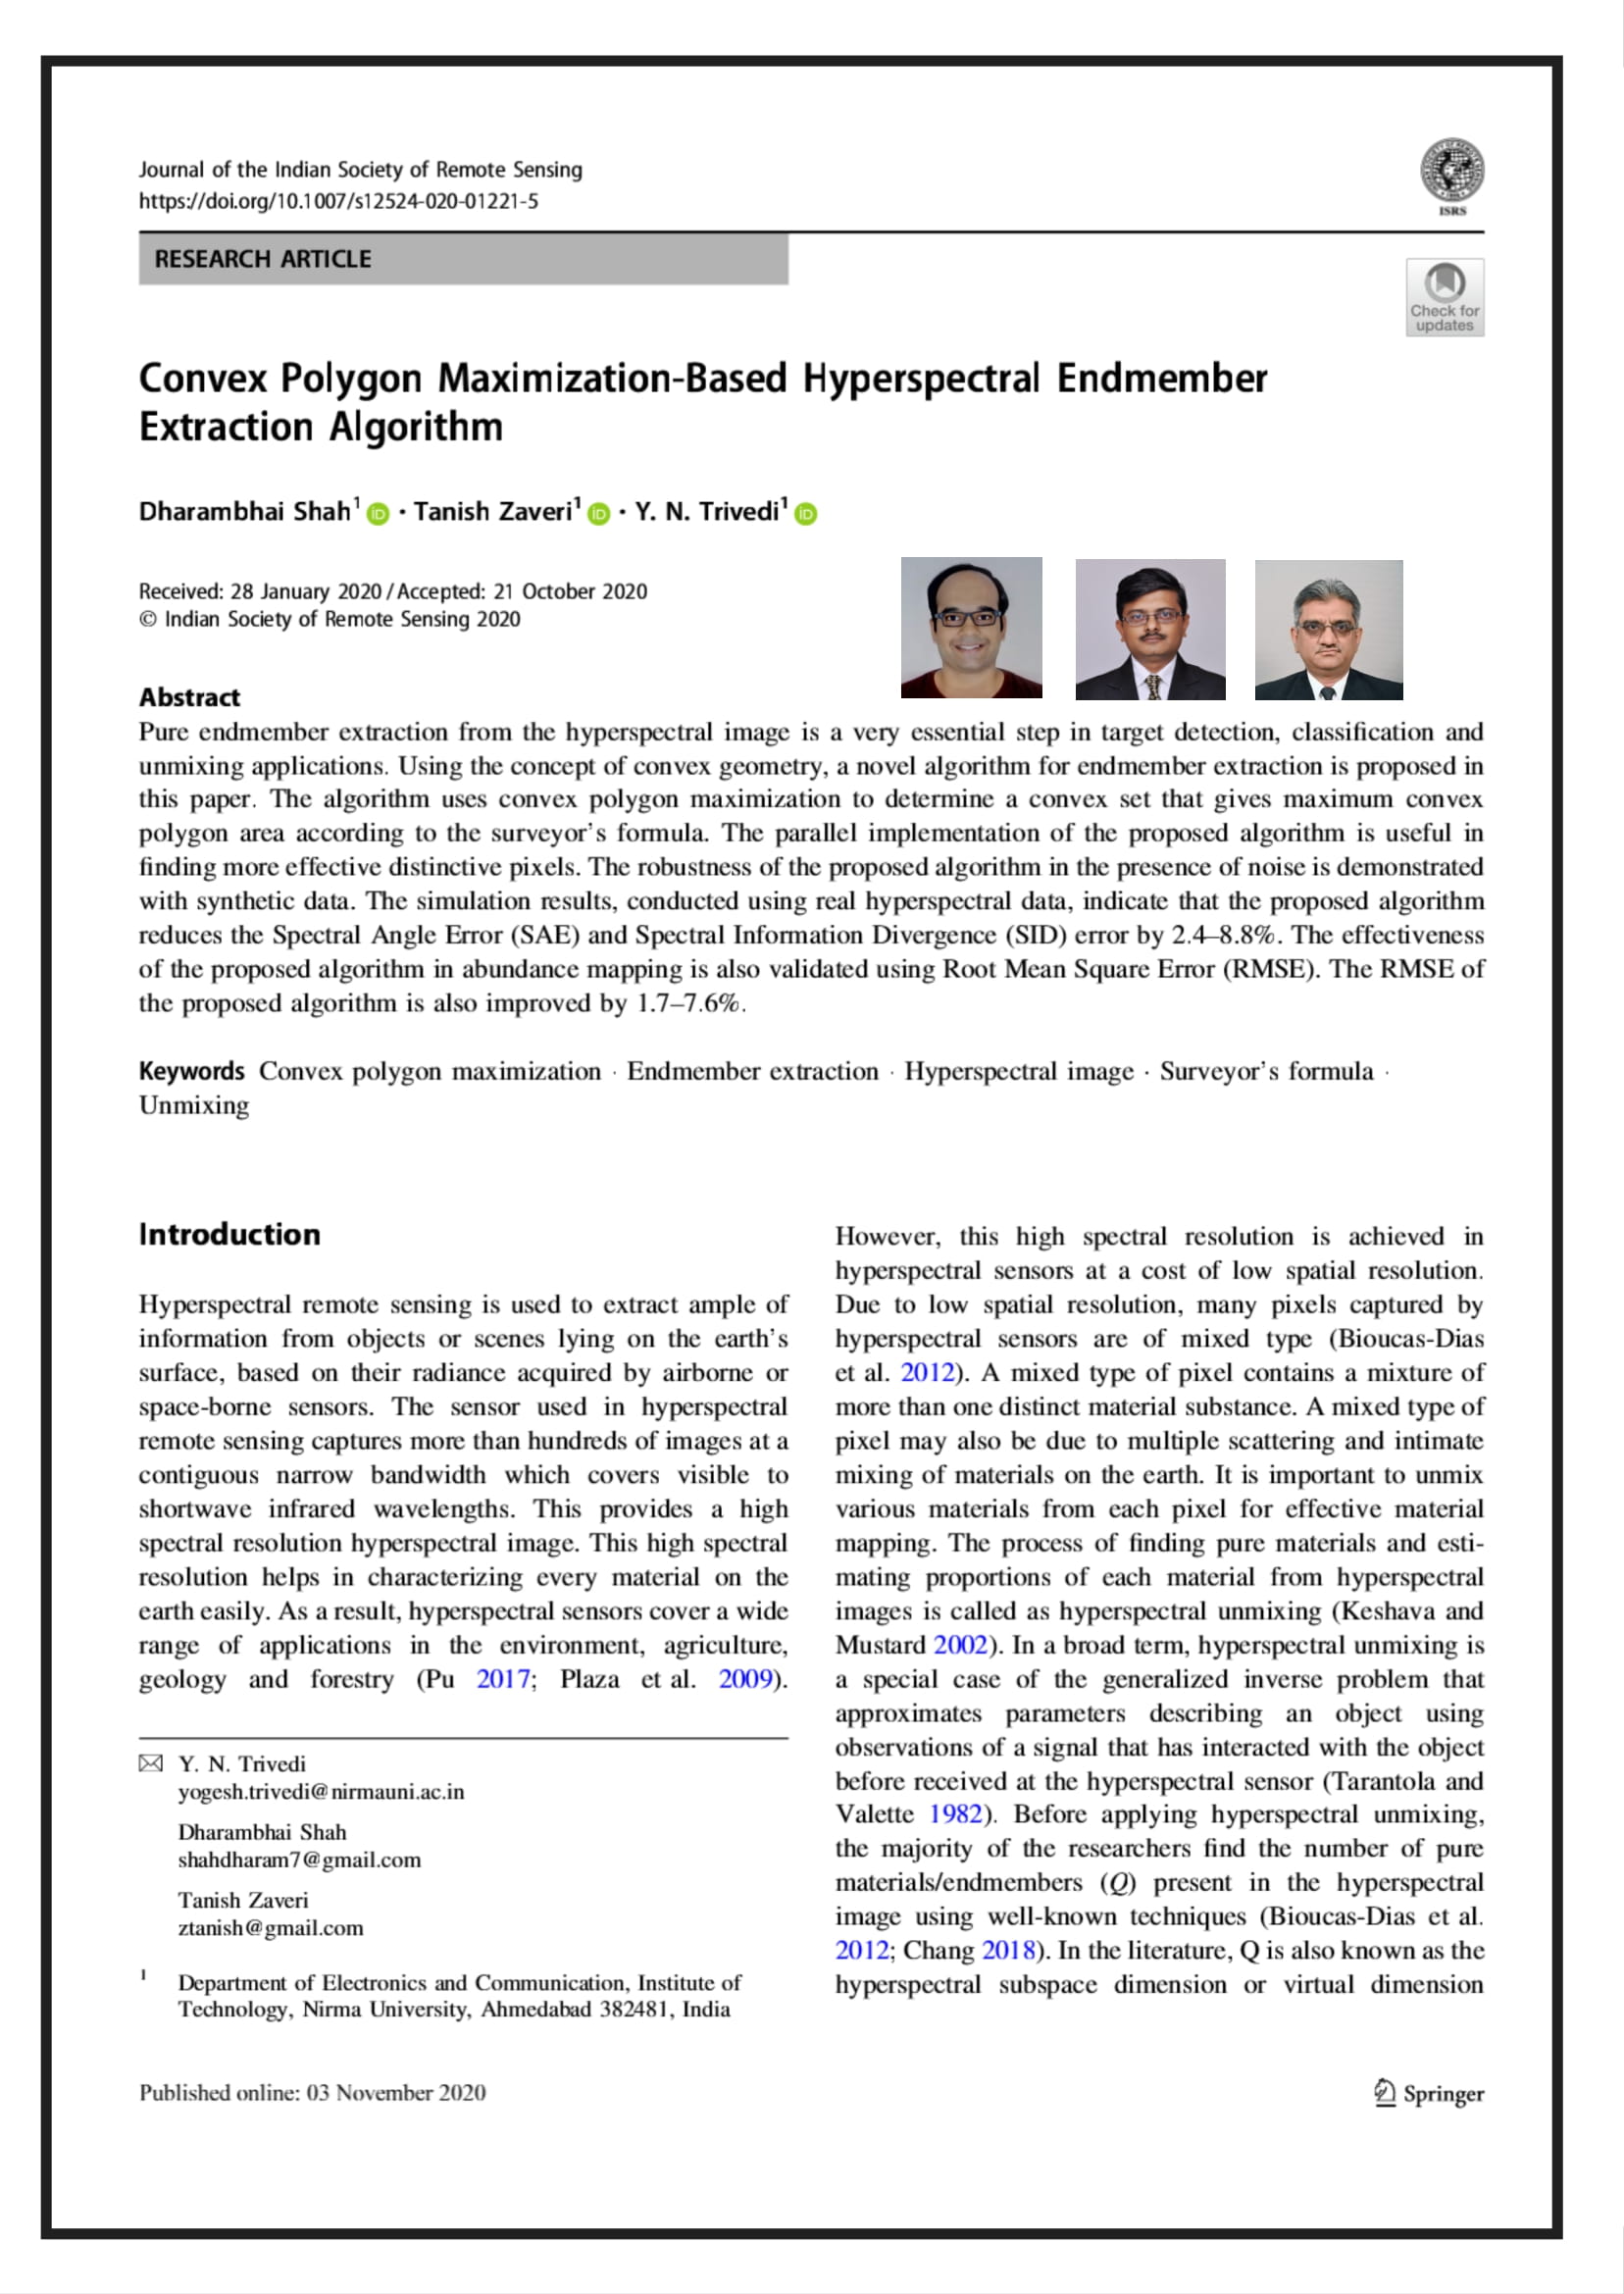 Convex Polygon Maximization-Based Hyperspectral Endmember Extraction Algorithm